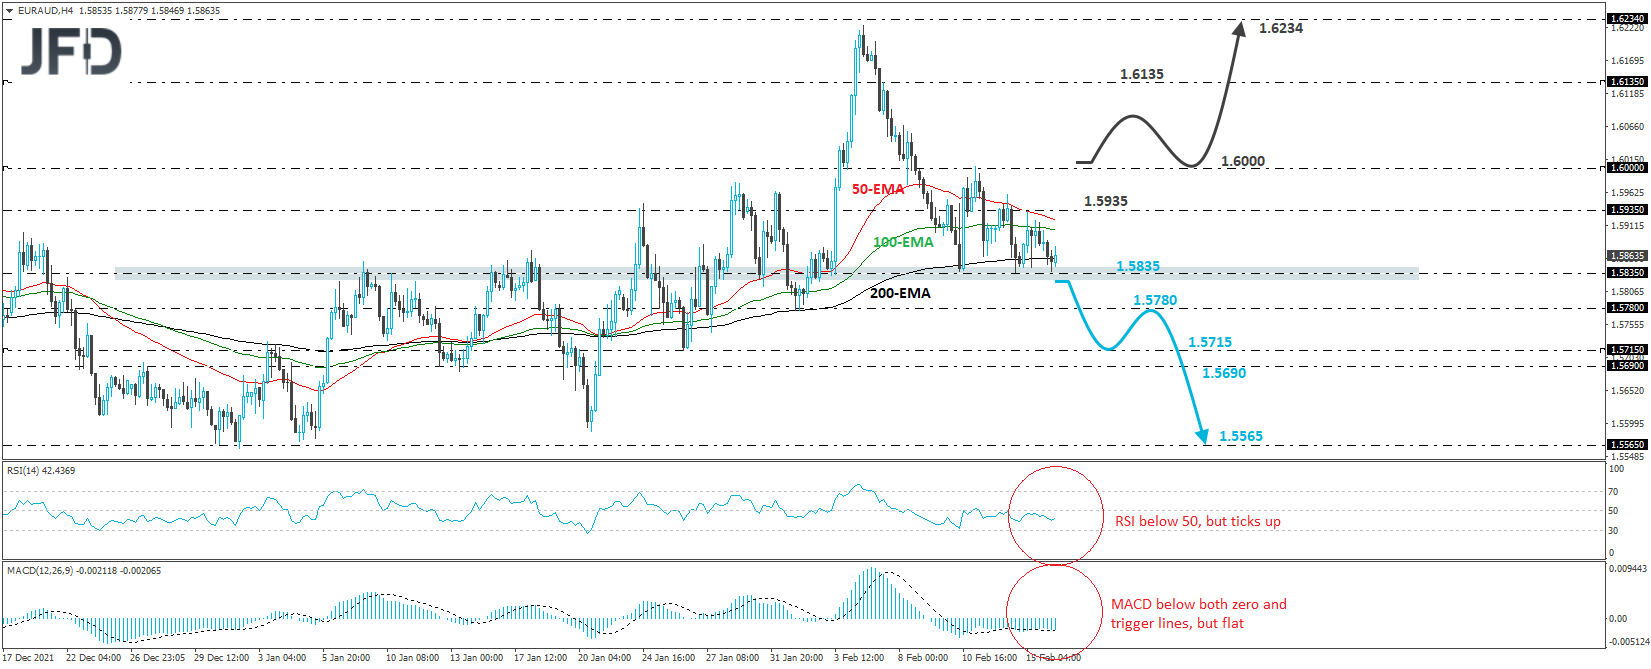 EUR/AUD 4-hour chart technical analysis.